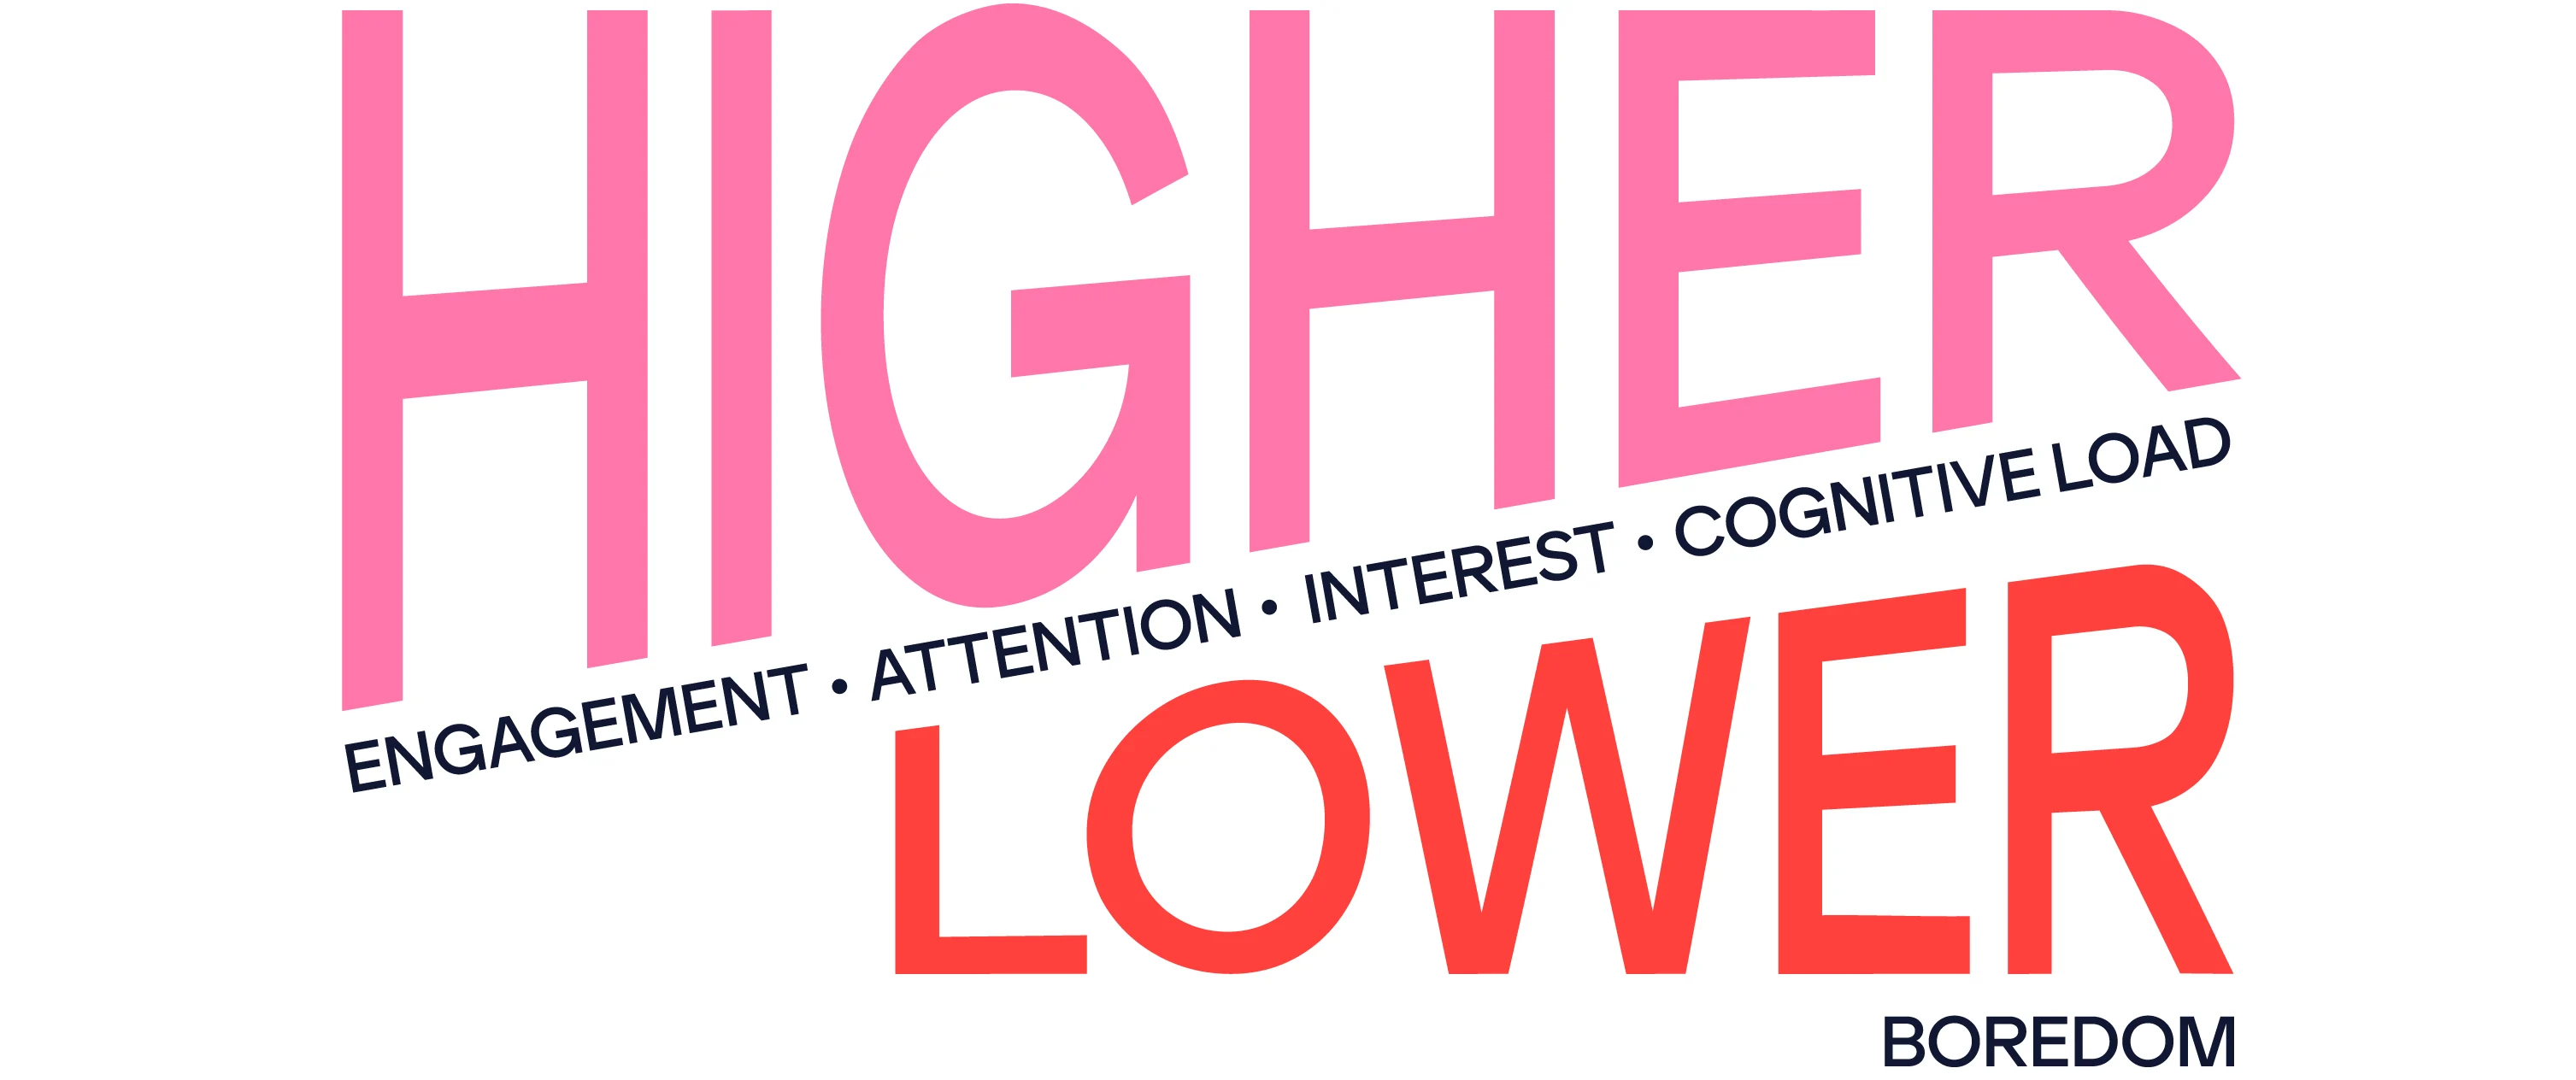 The Mentimeter Effect - Higher:Lower